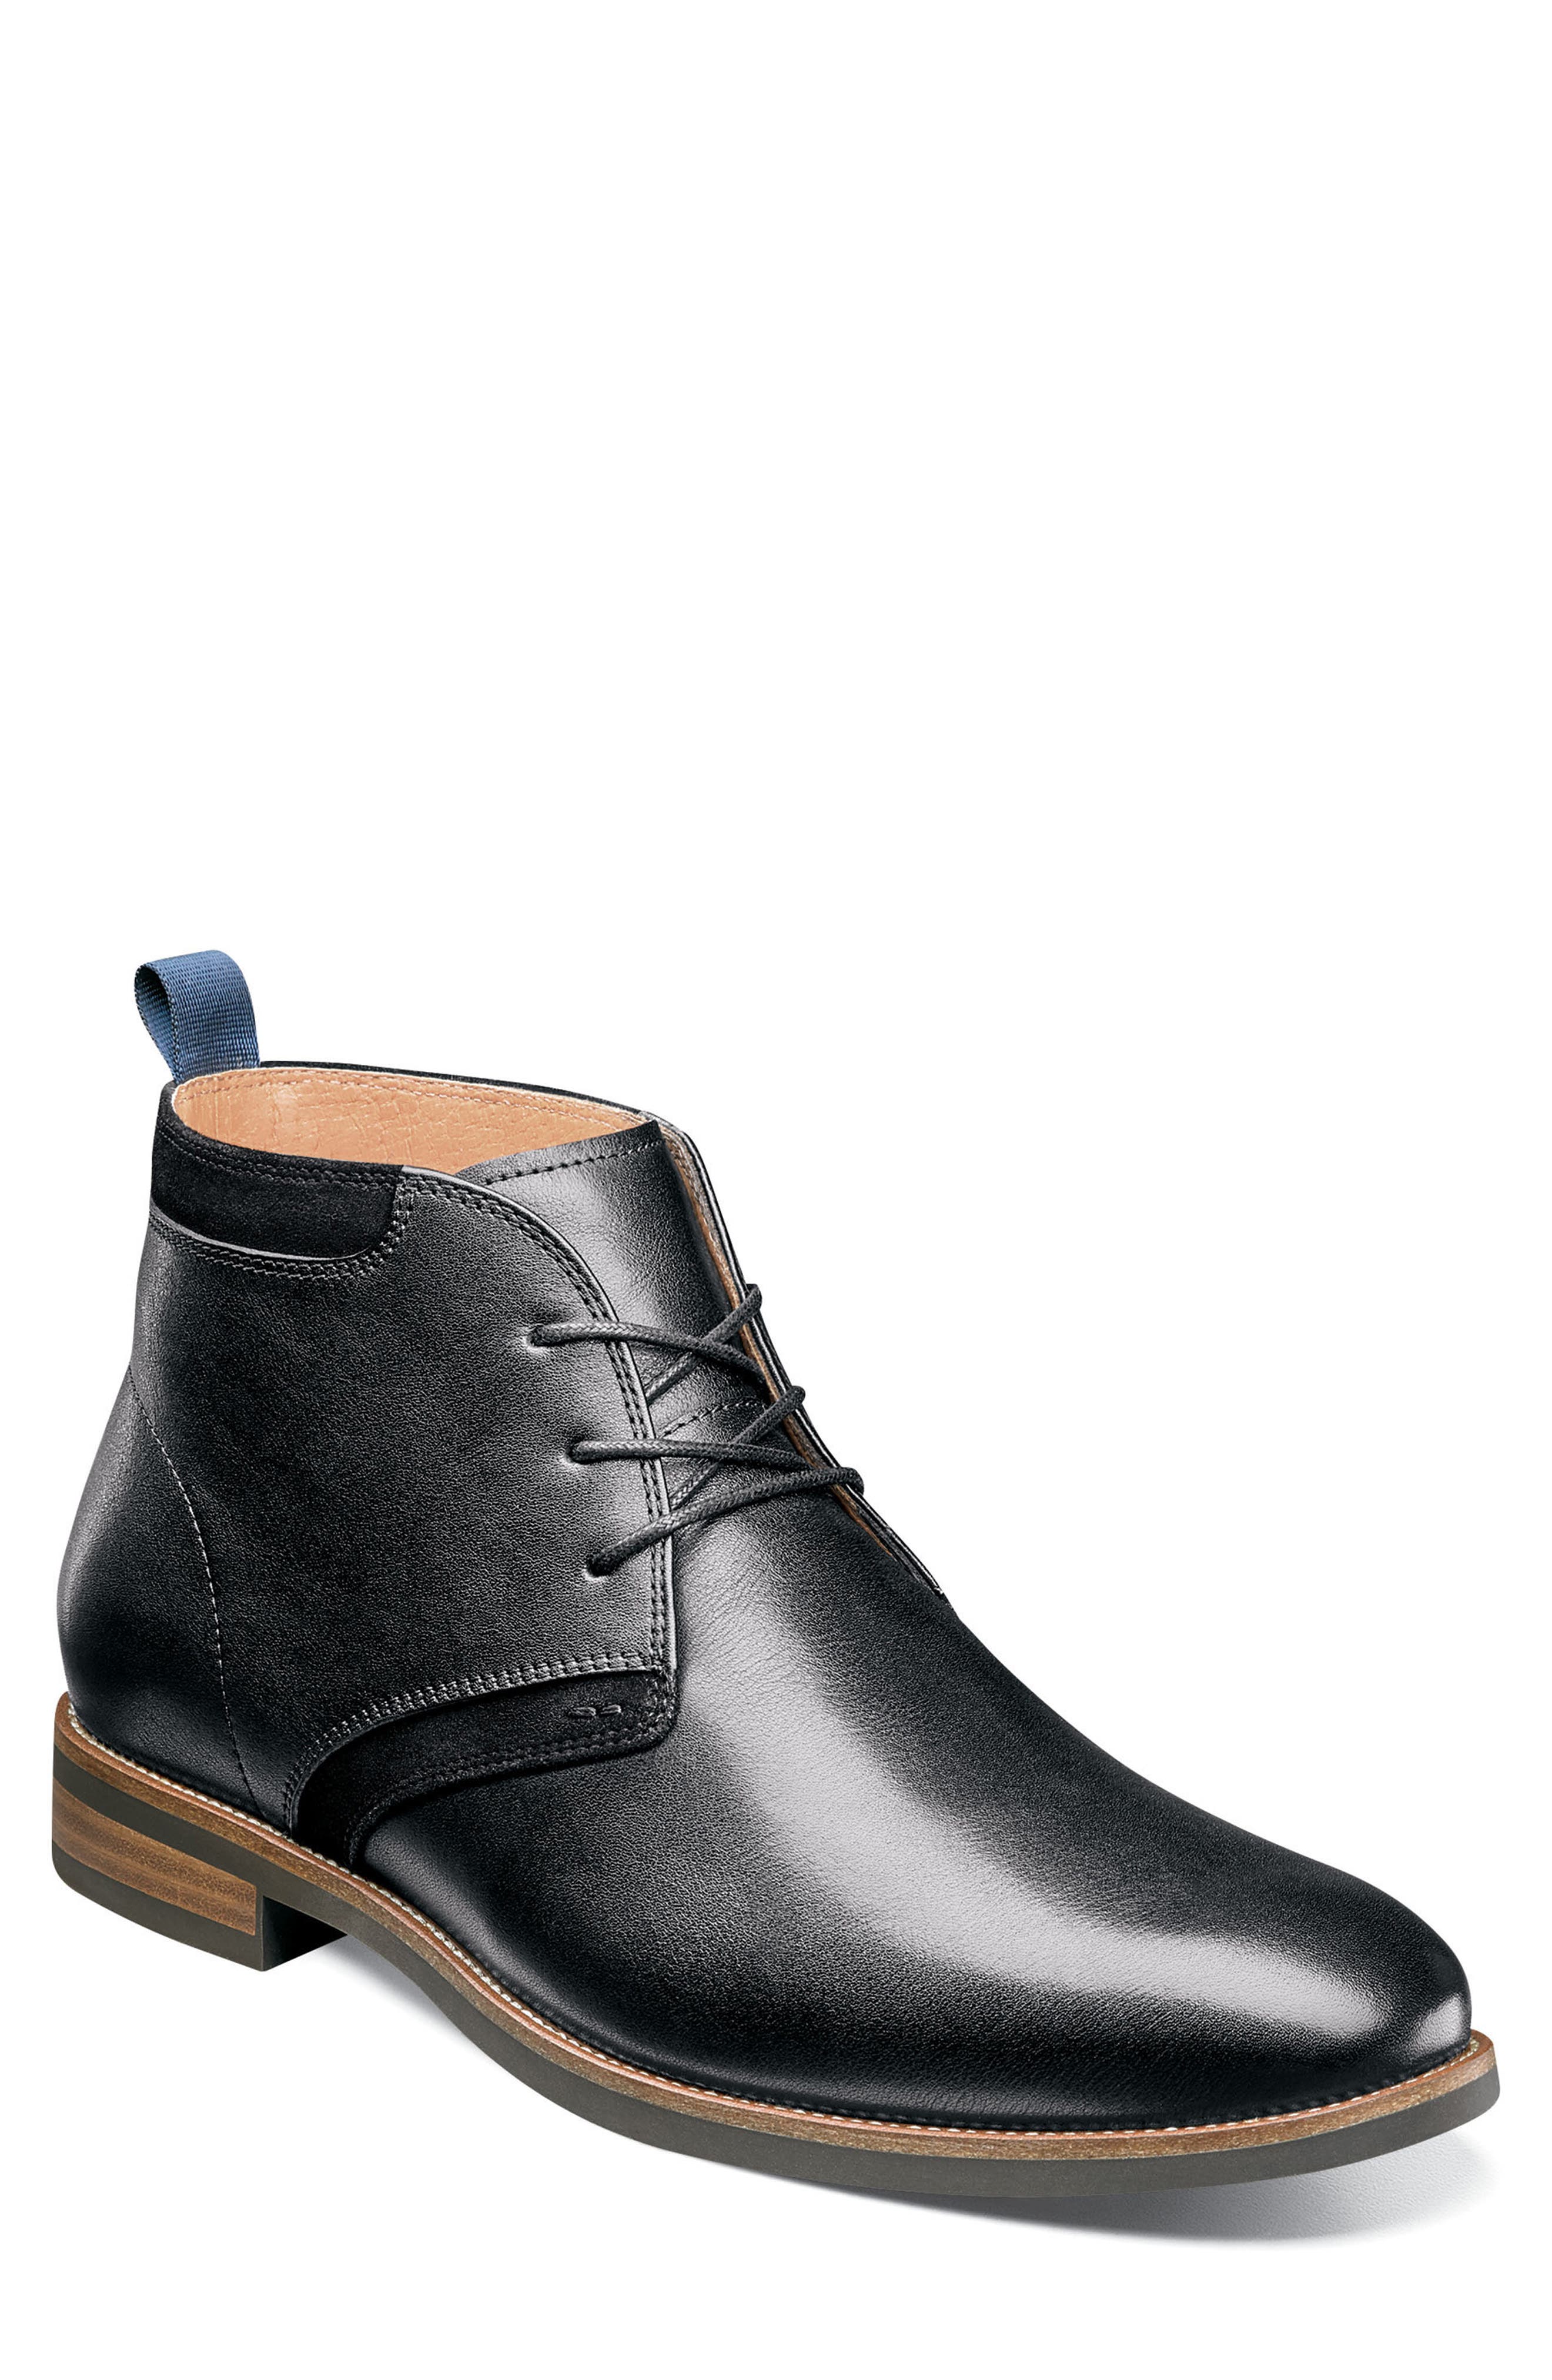 chukka boots size 13